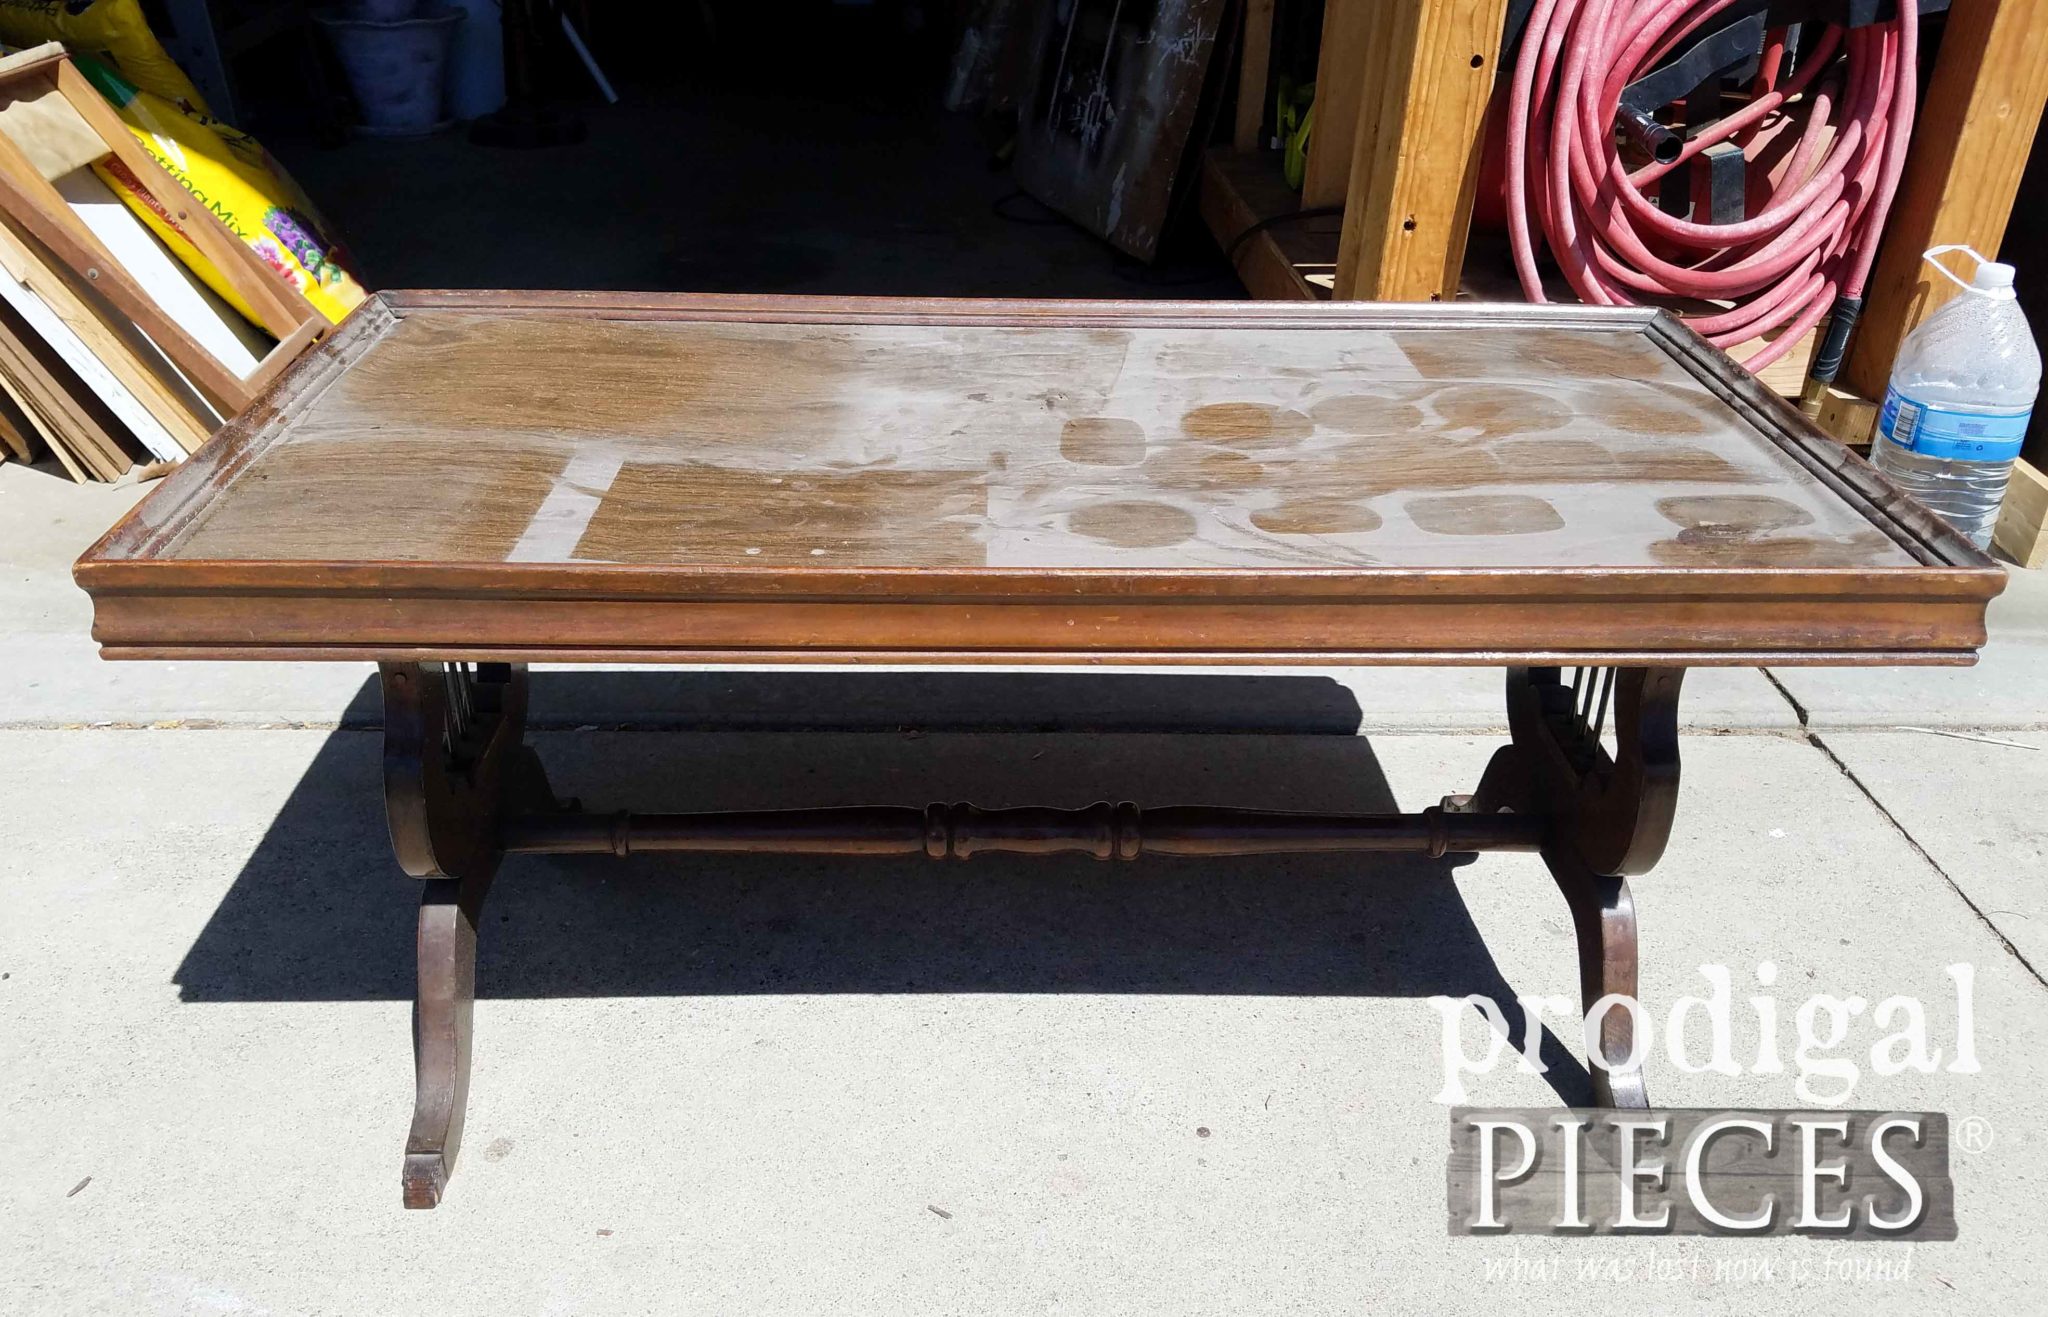 Worn Antique Lyre Coffee Table Needs New Life | prodigalpieces.com